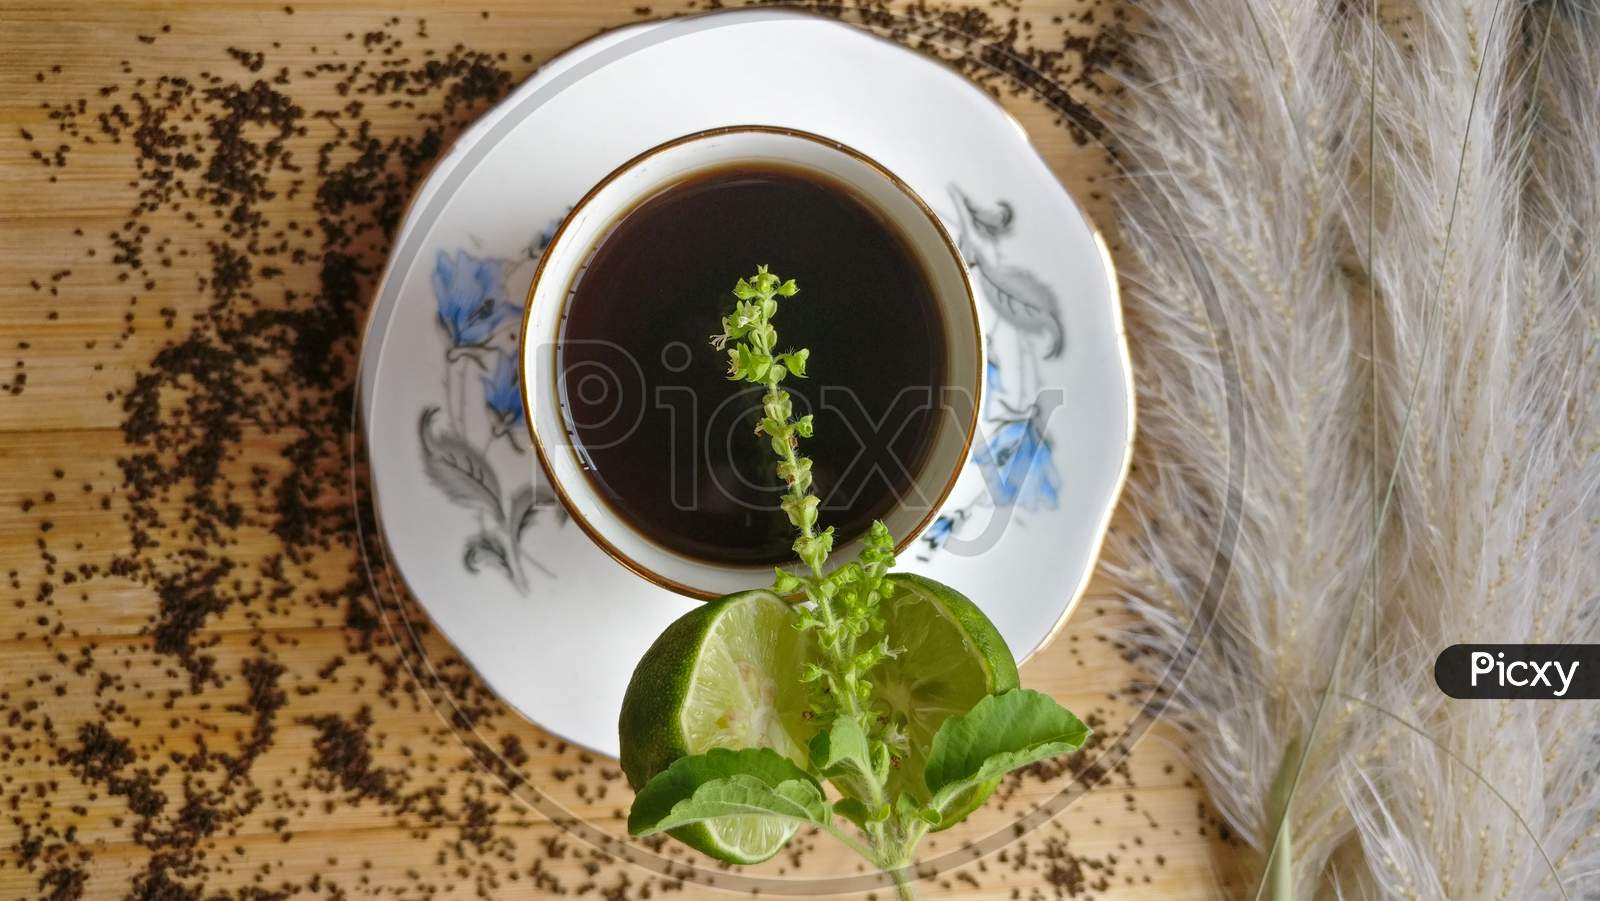 Morning lemon tea with basil